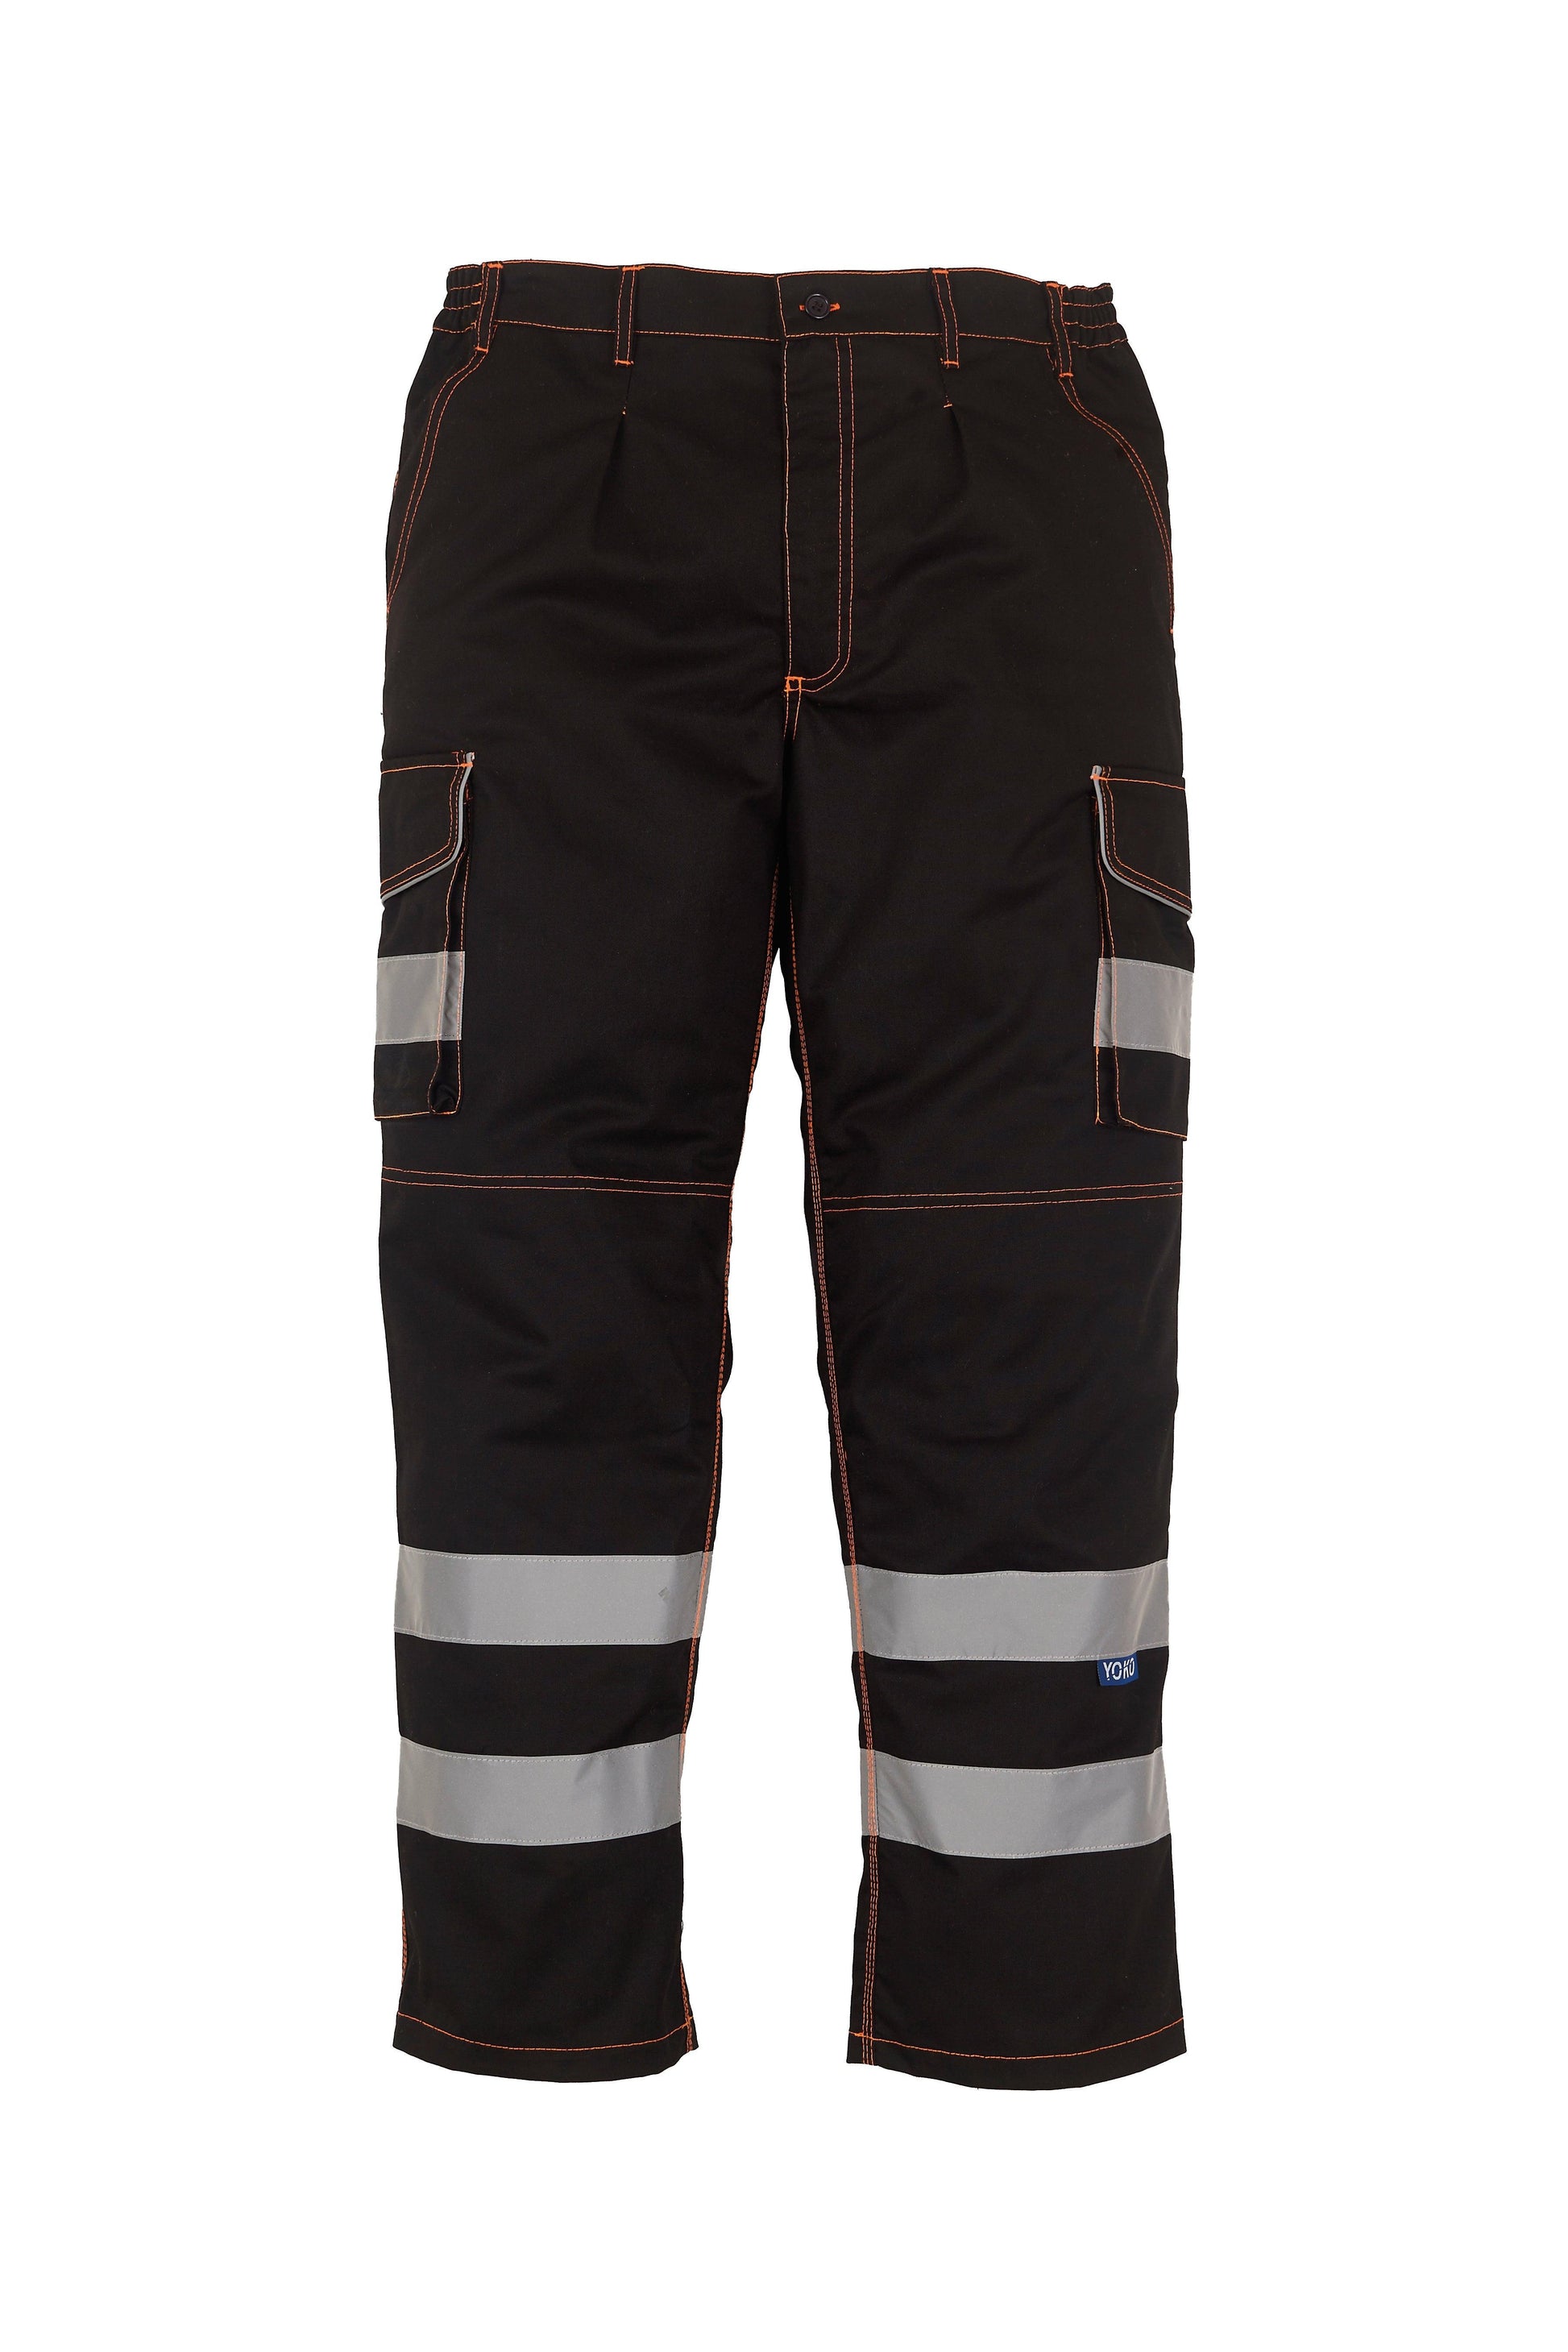 Hi-vis polycotton cargo trousers with knee pad pockets (HV018T/3M) YK073 - Trustsport